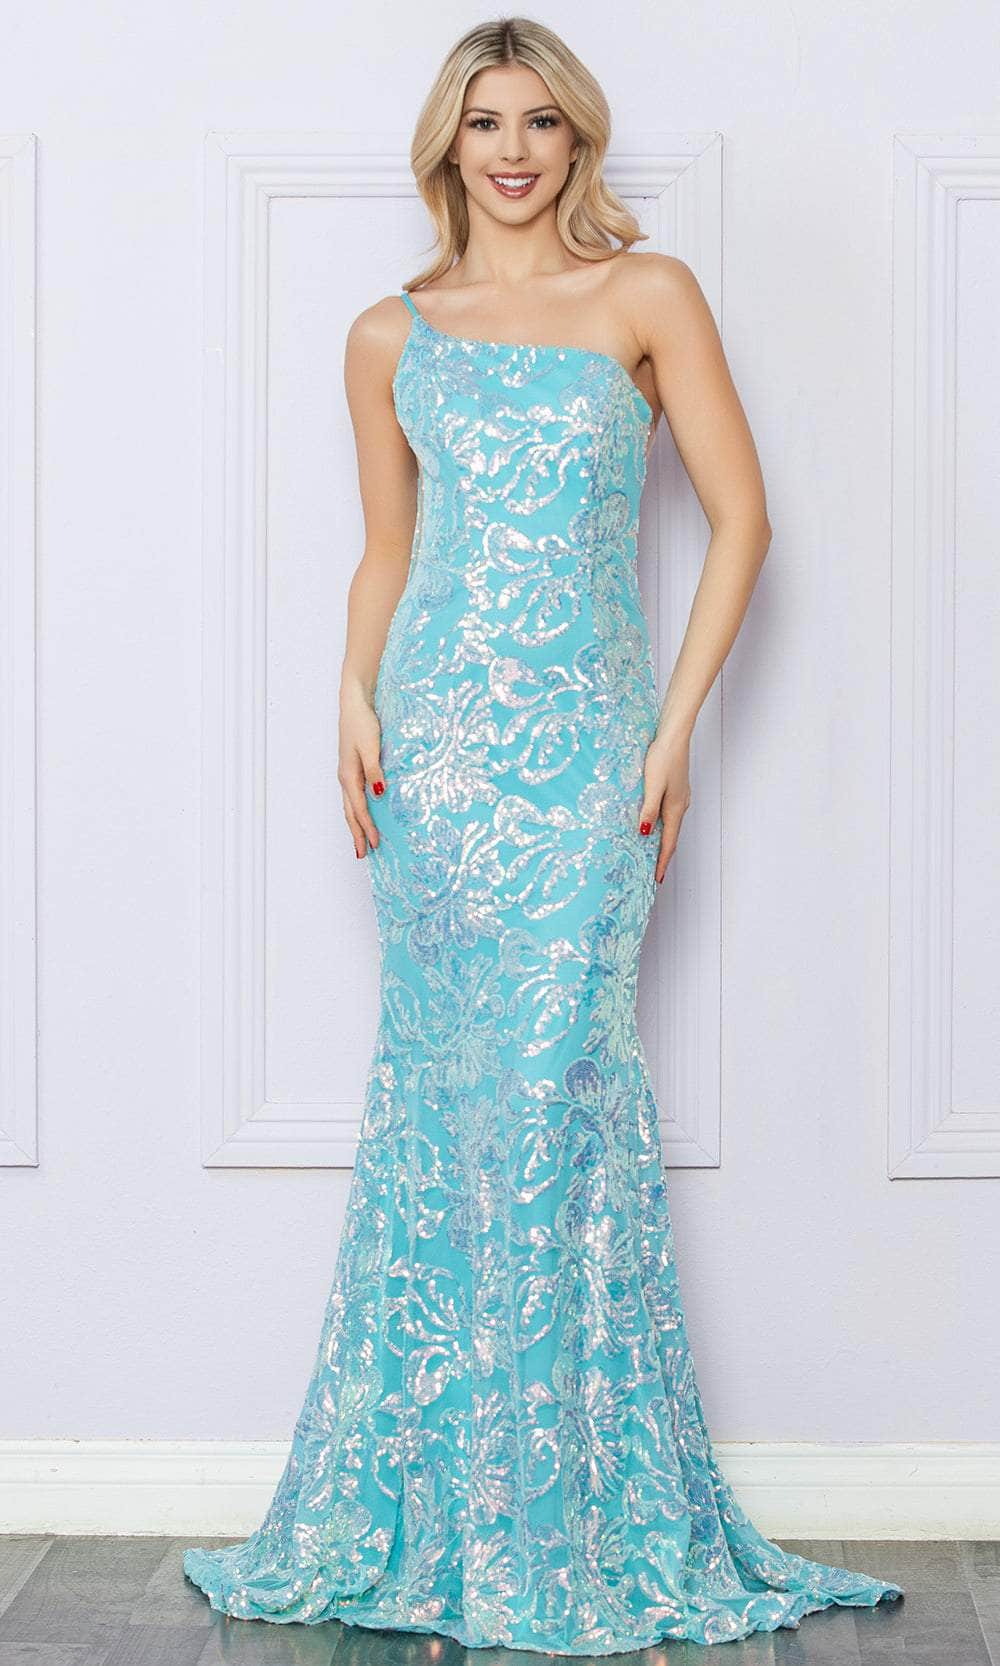 Nox Anabel R1308 - Asymmetric Sheath Prom Dress Special Occasion Dresses 